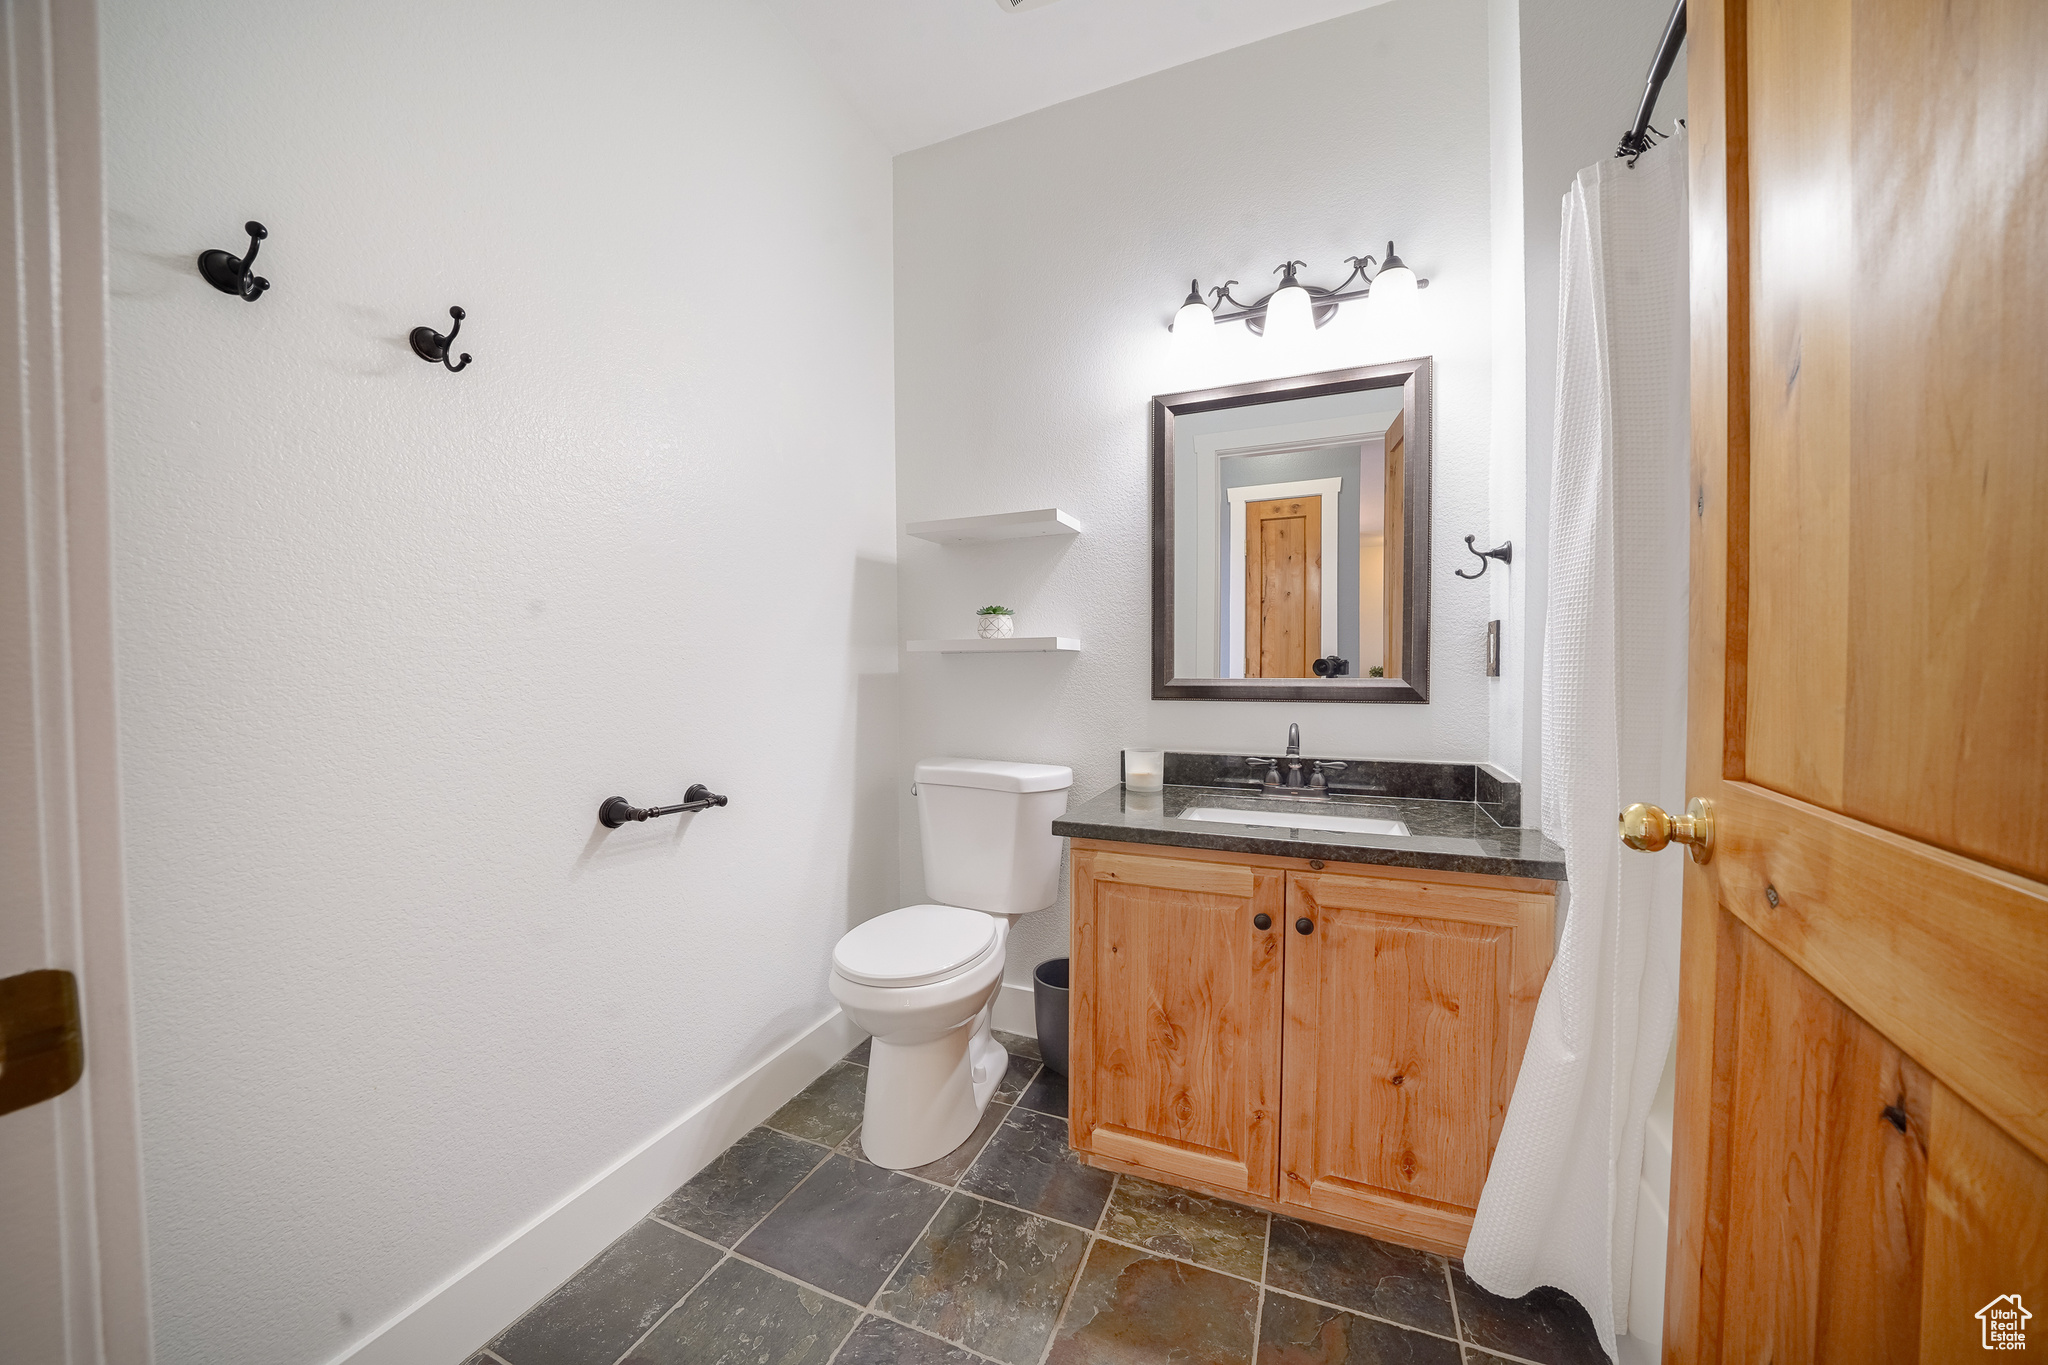 Bathroom featuring toilet, tile flooring, and large vanity